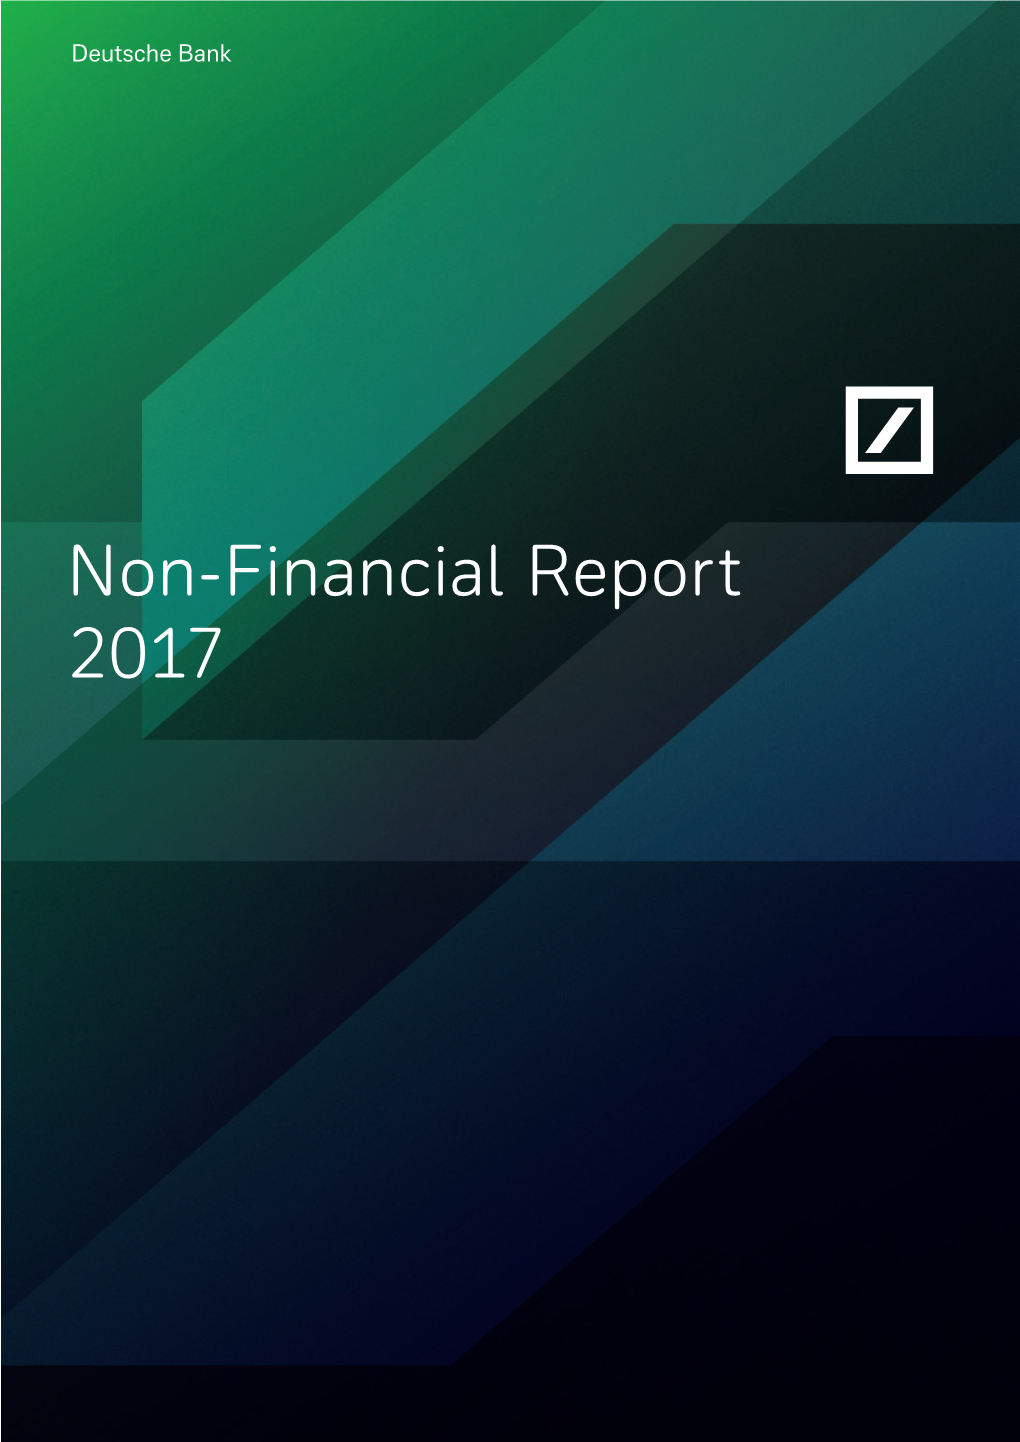 Non-Financial Report 2017 Contents